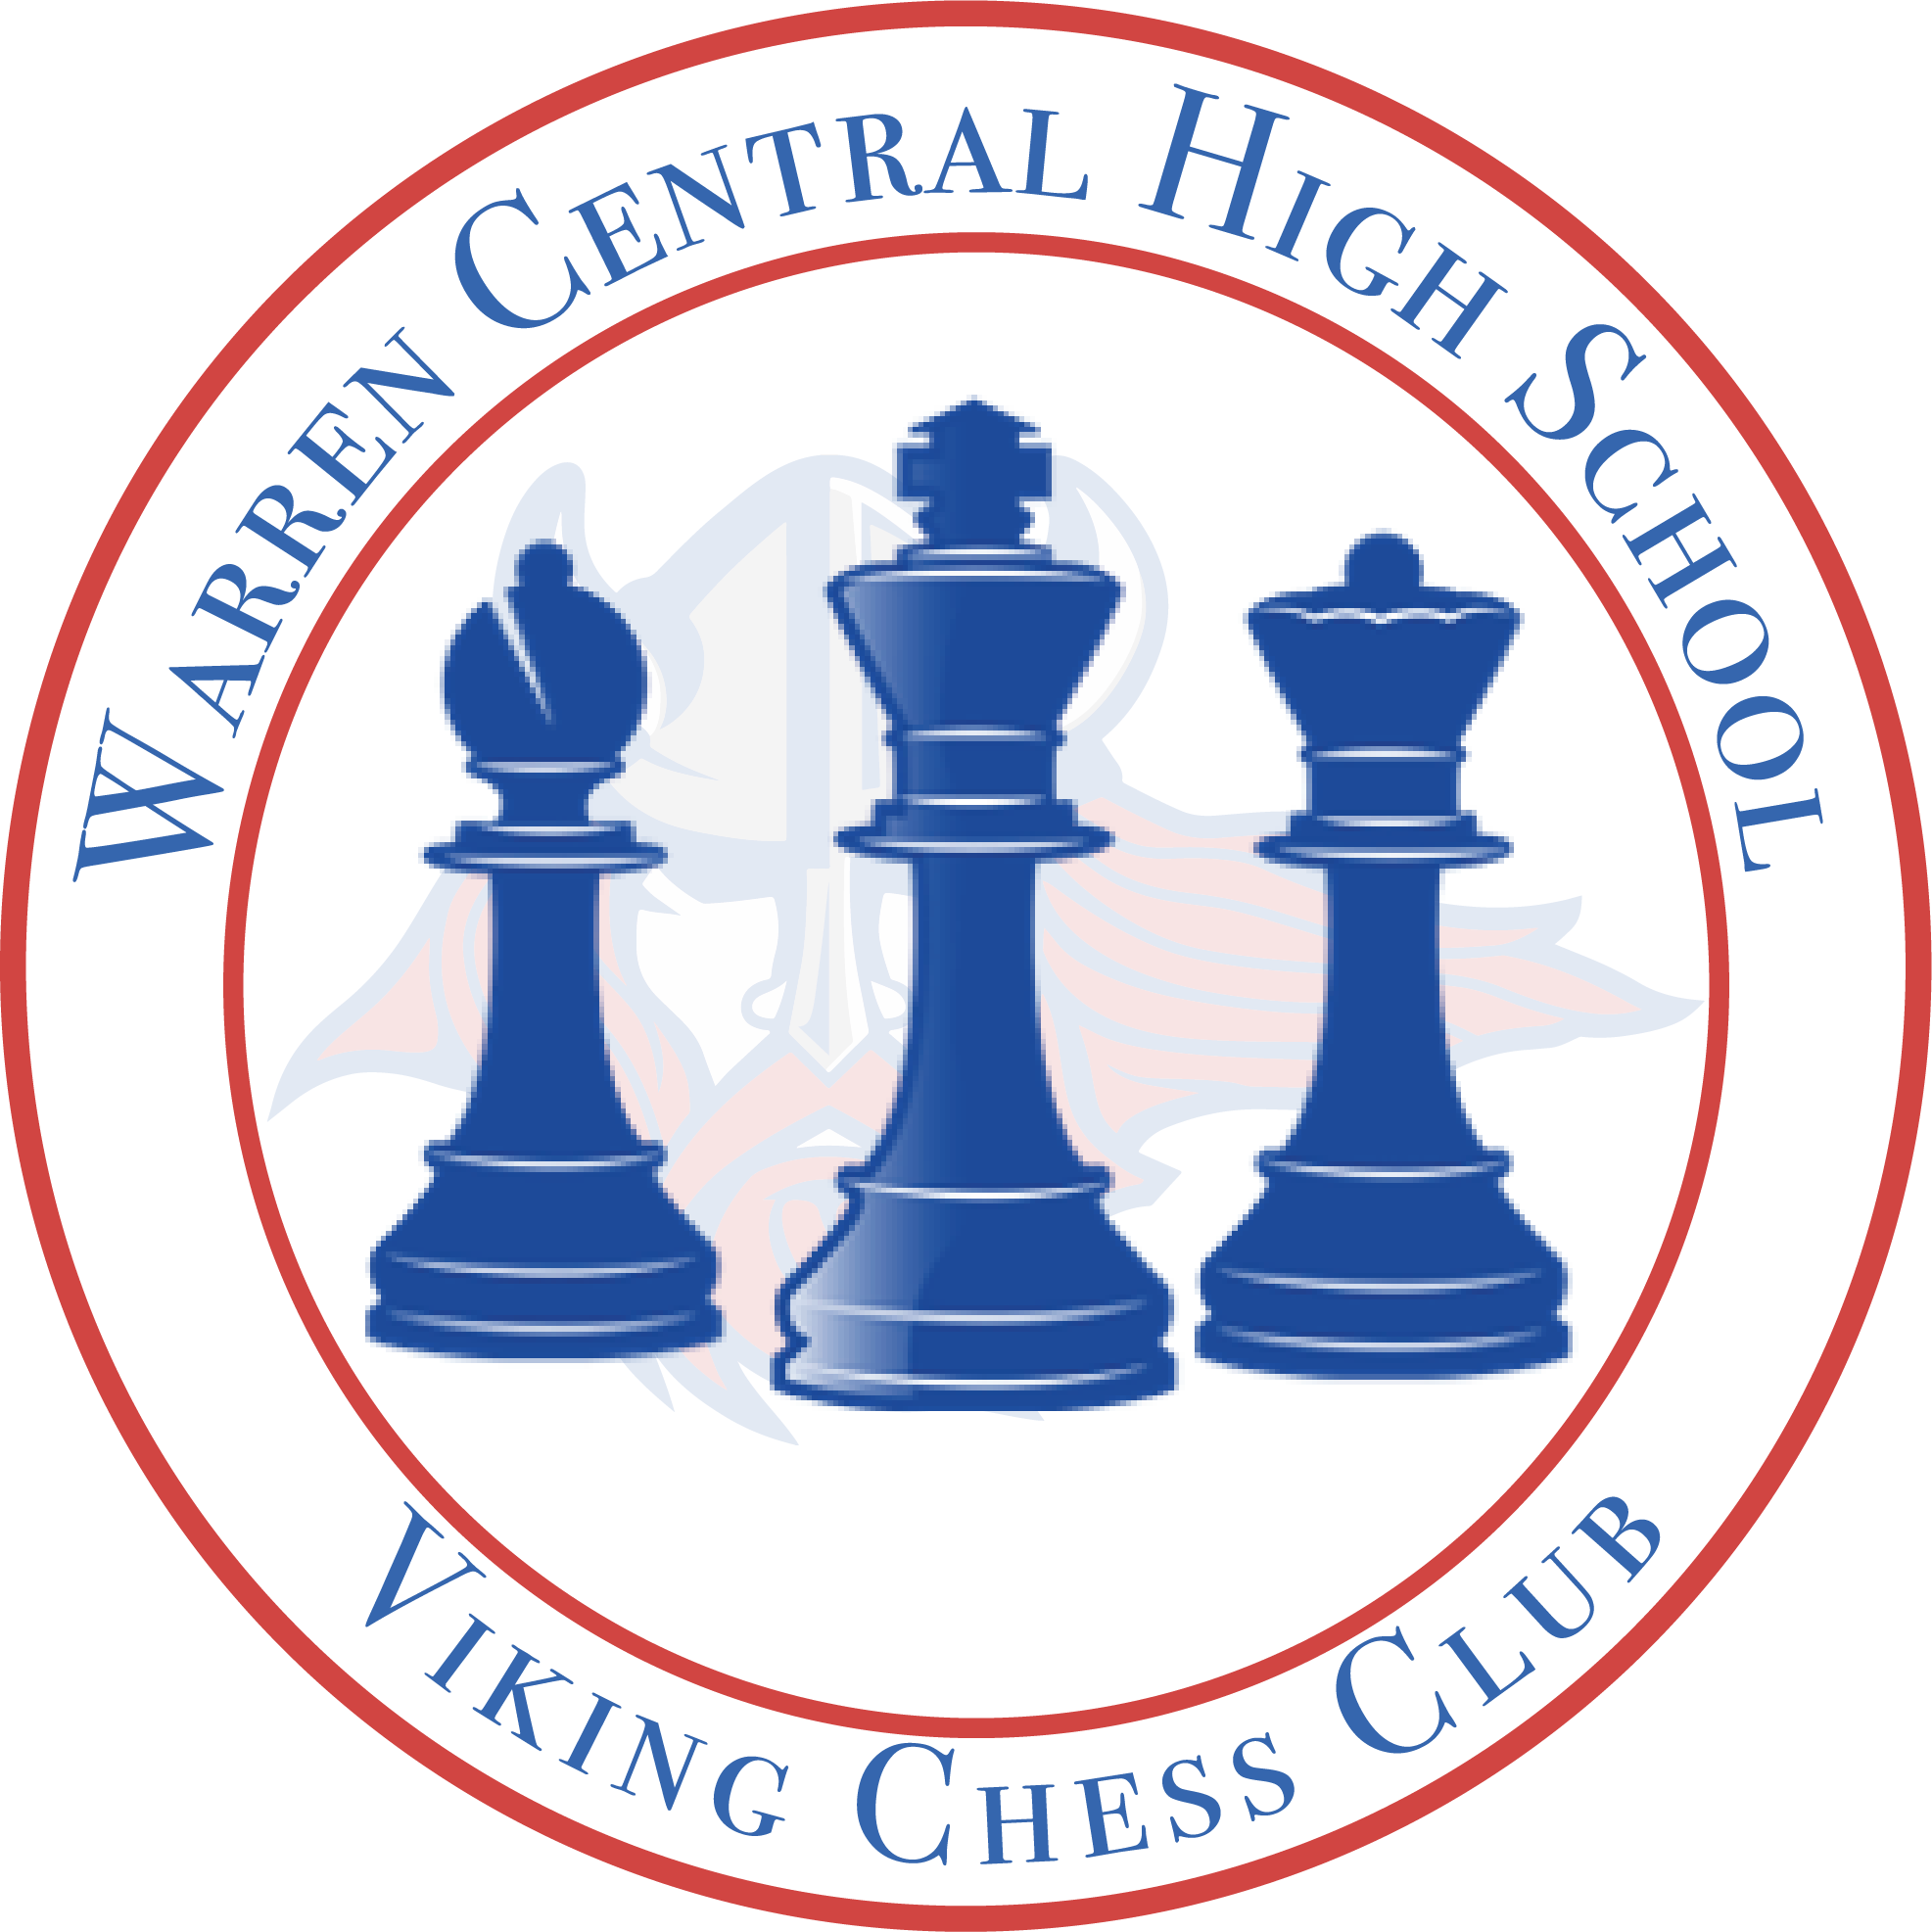 Viking Chess Club